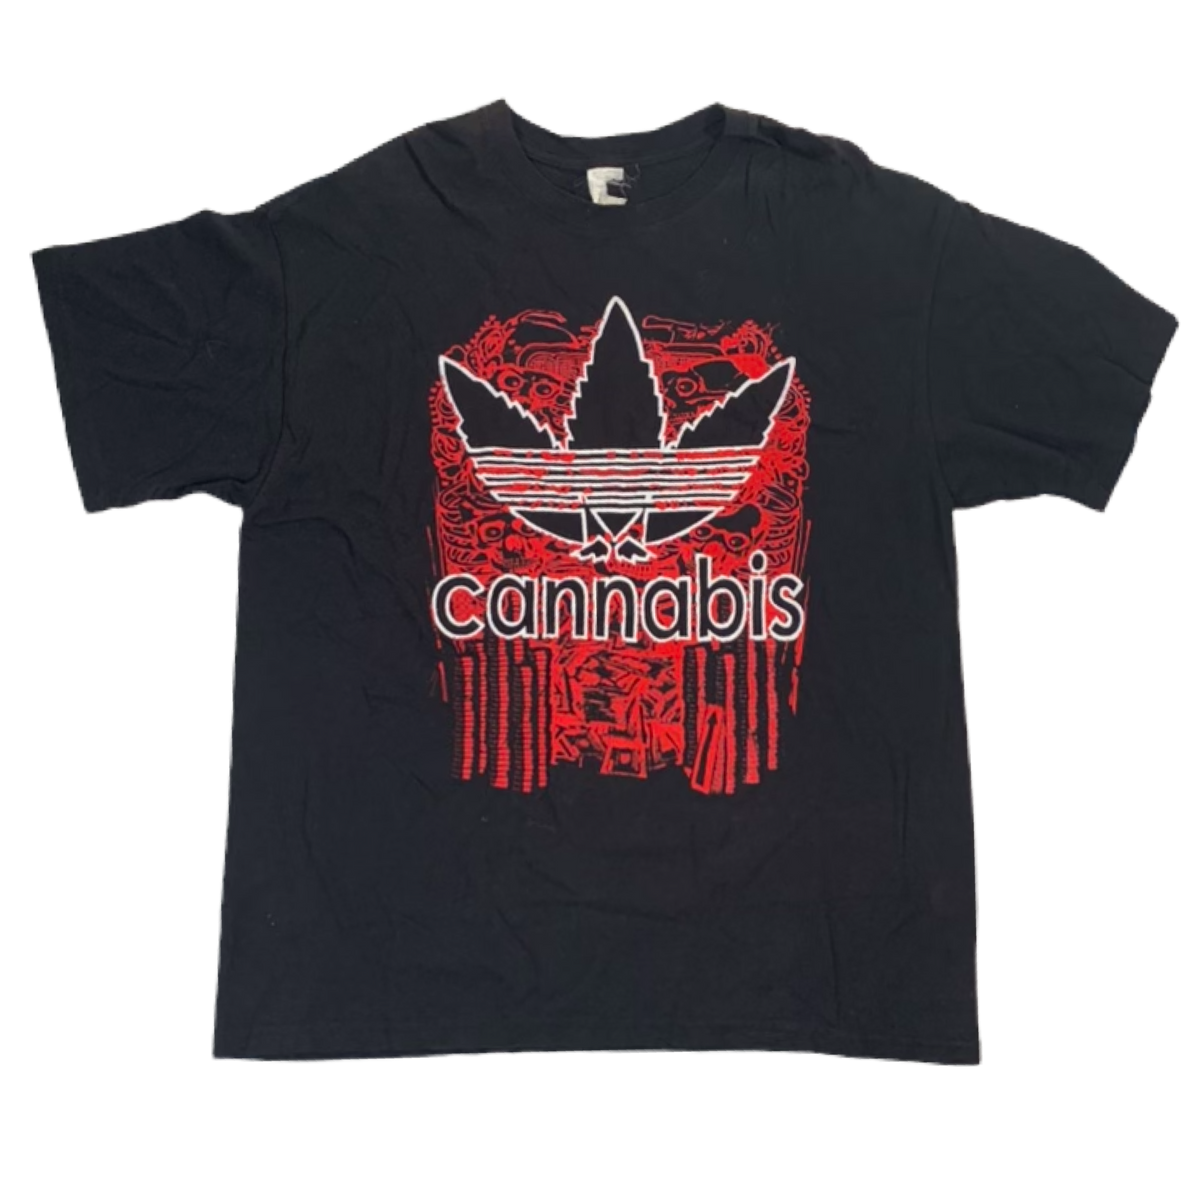 Vintage Original Adidas Cannabis Parody T shirt 